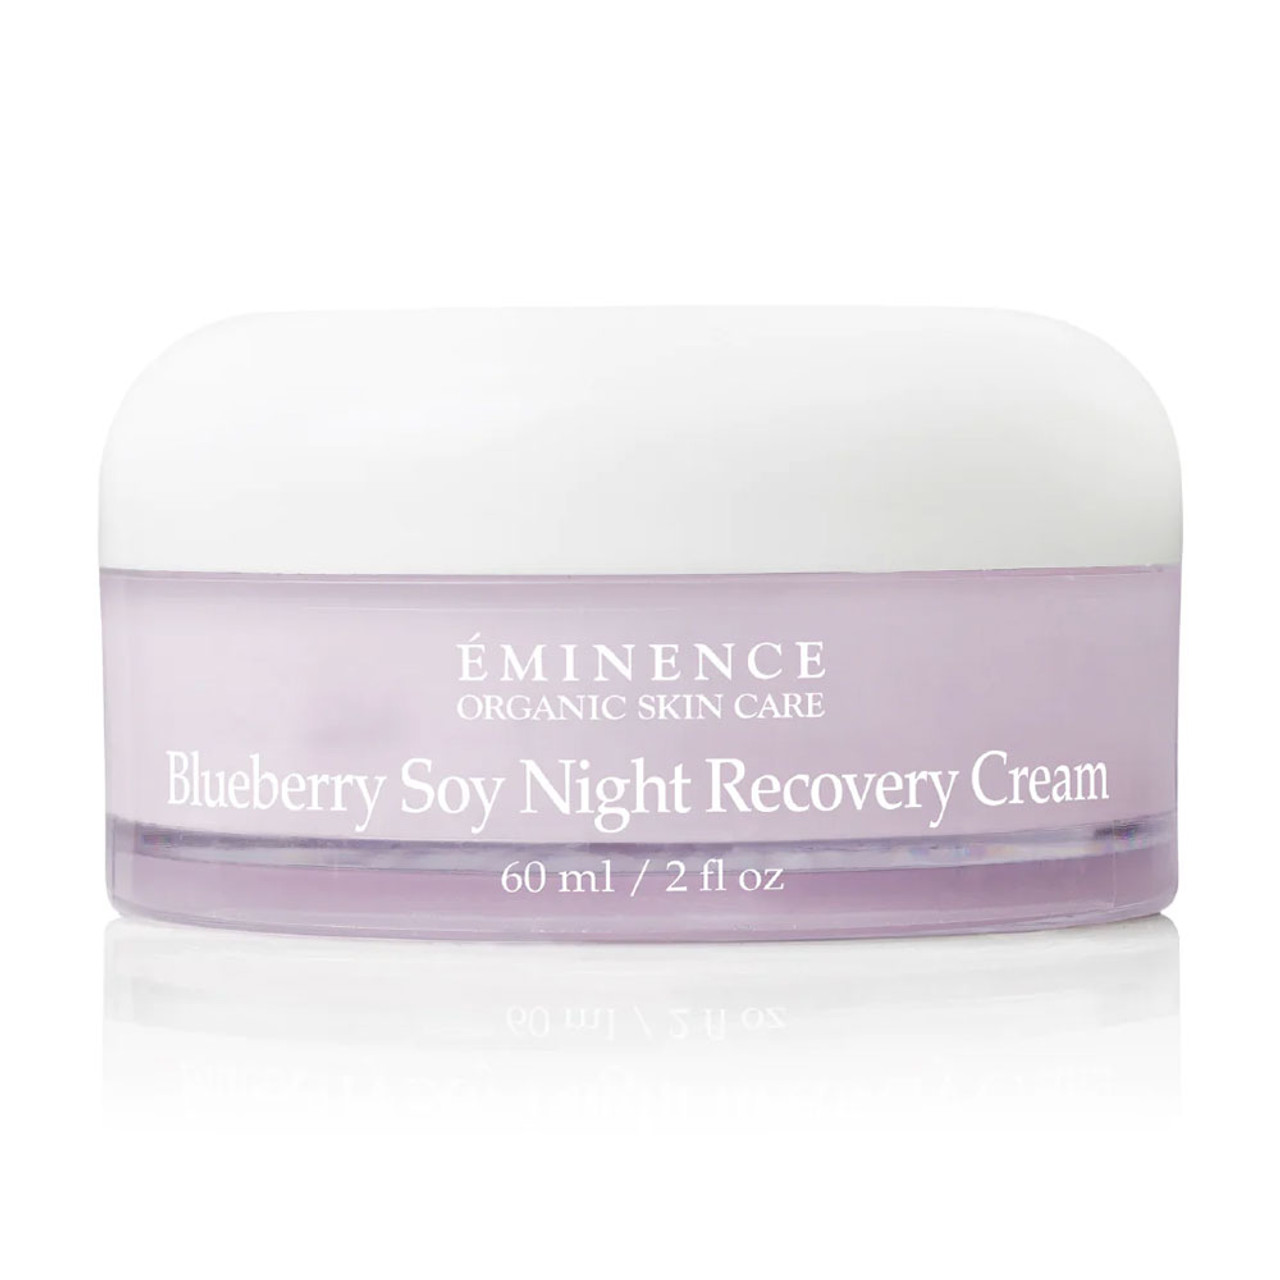 Eminence Blueberry Soy Night Recovery Cream BeautifiedYou.com